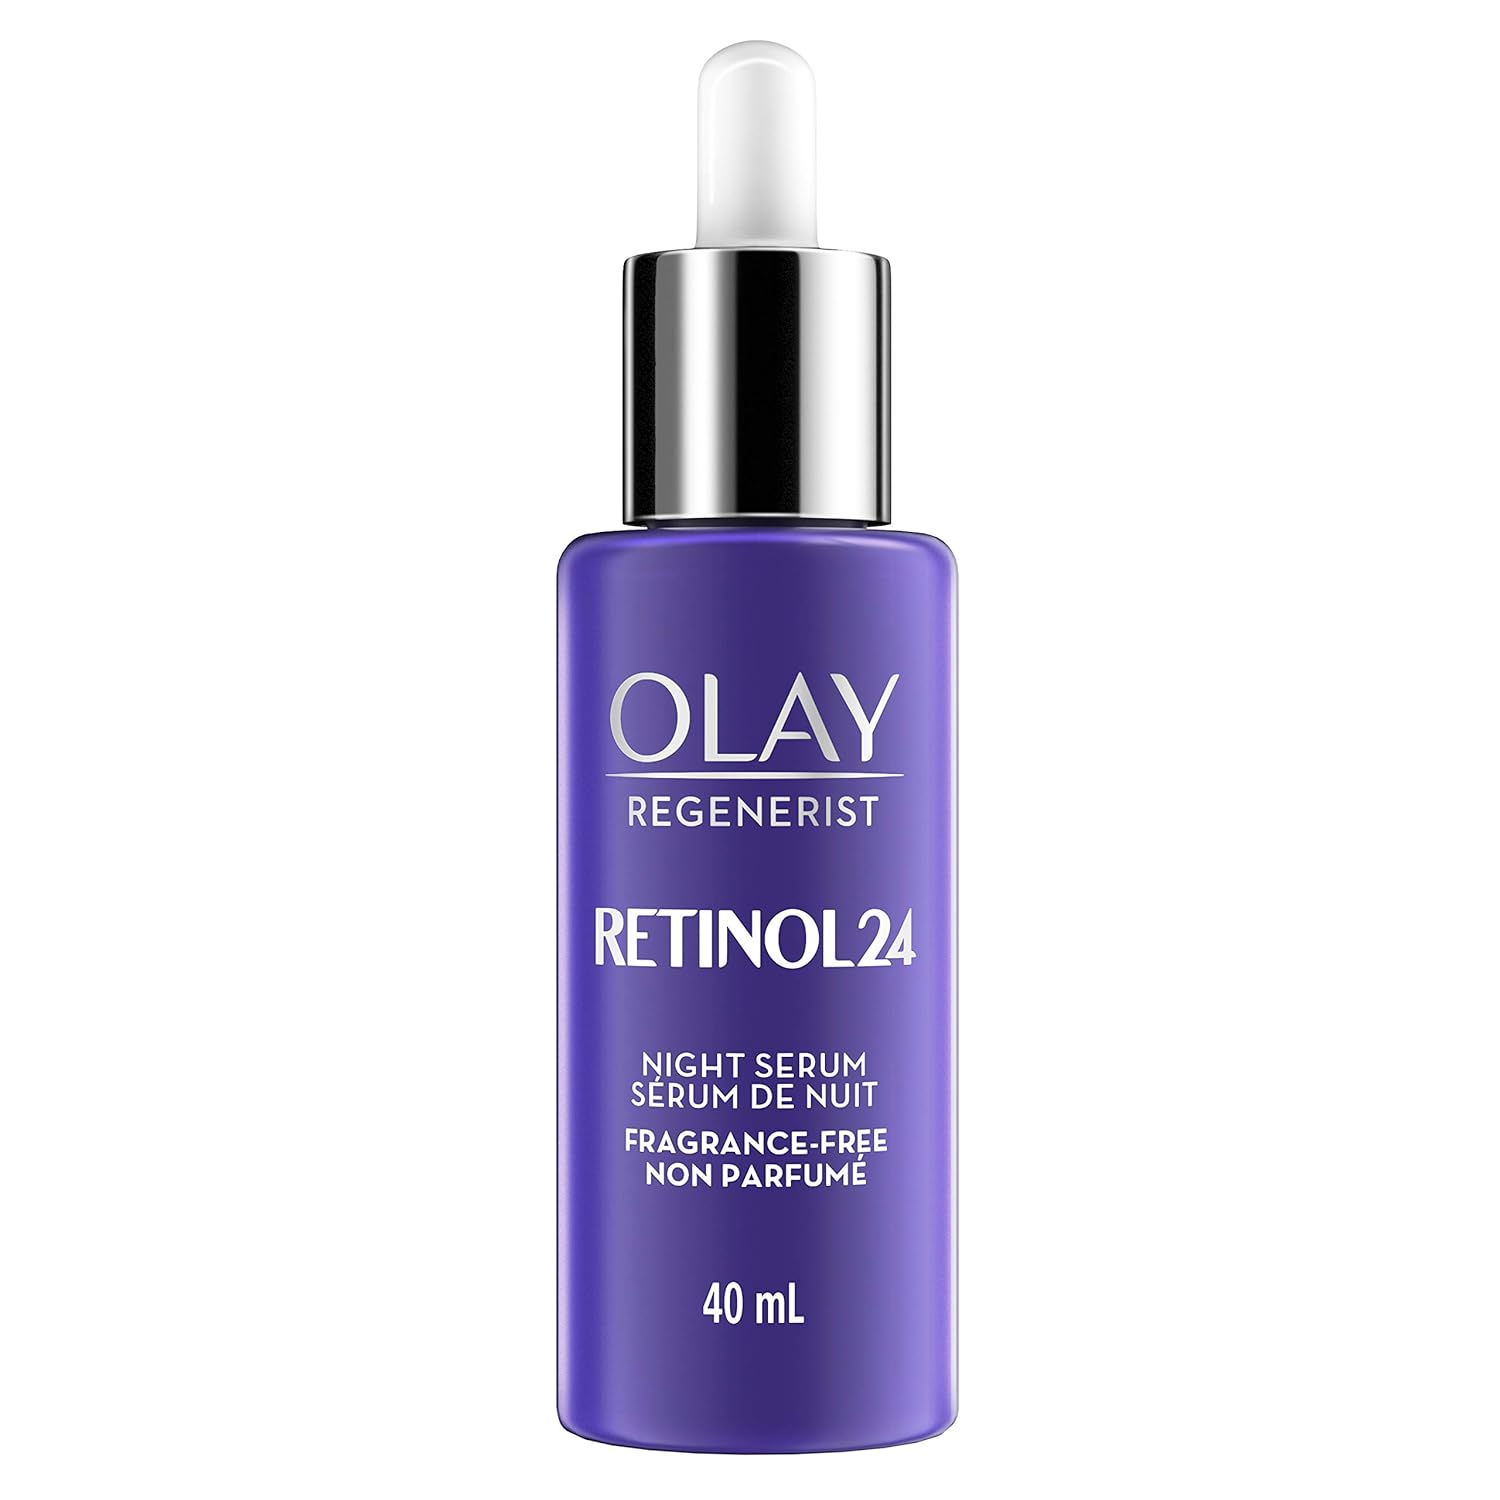 Olay regenerist retinol 24 night serum fragrance free, Unscented, 1.35